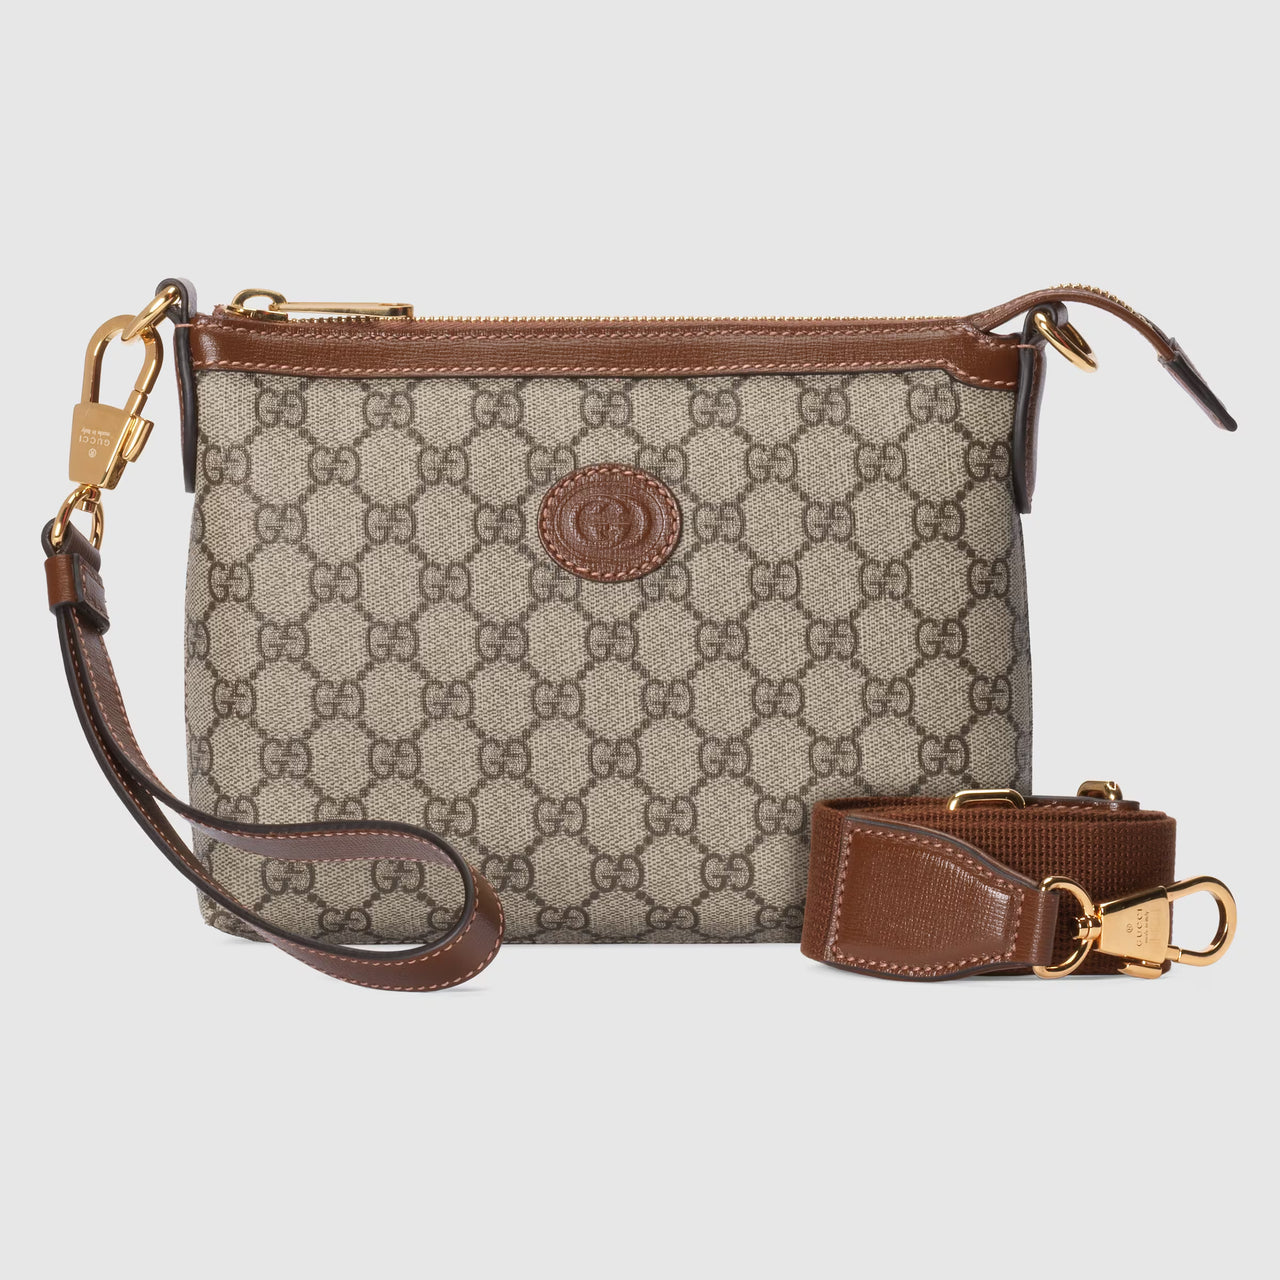 Gucci Messenger Bag with Interlocking G (Beige and Ebony)